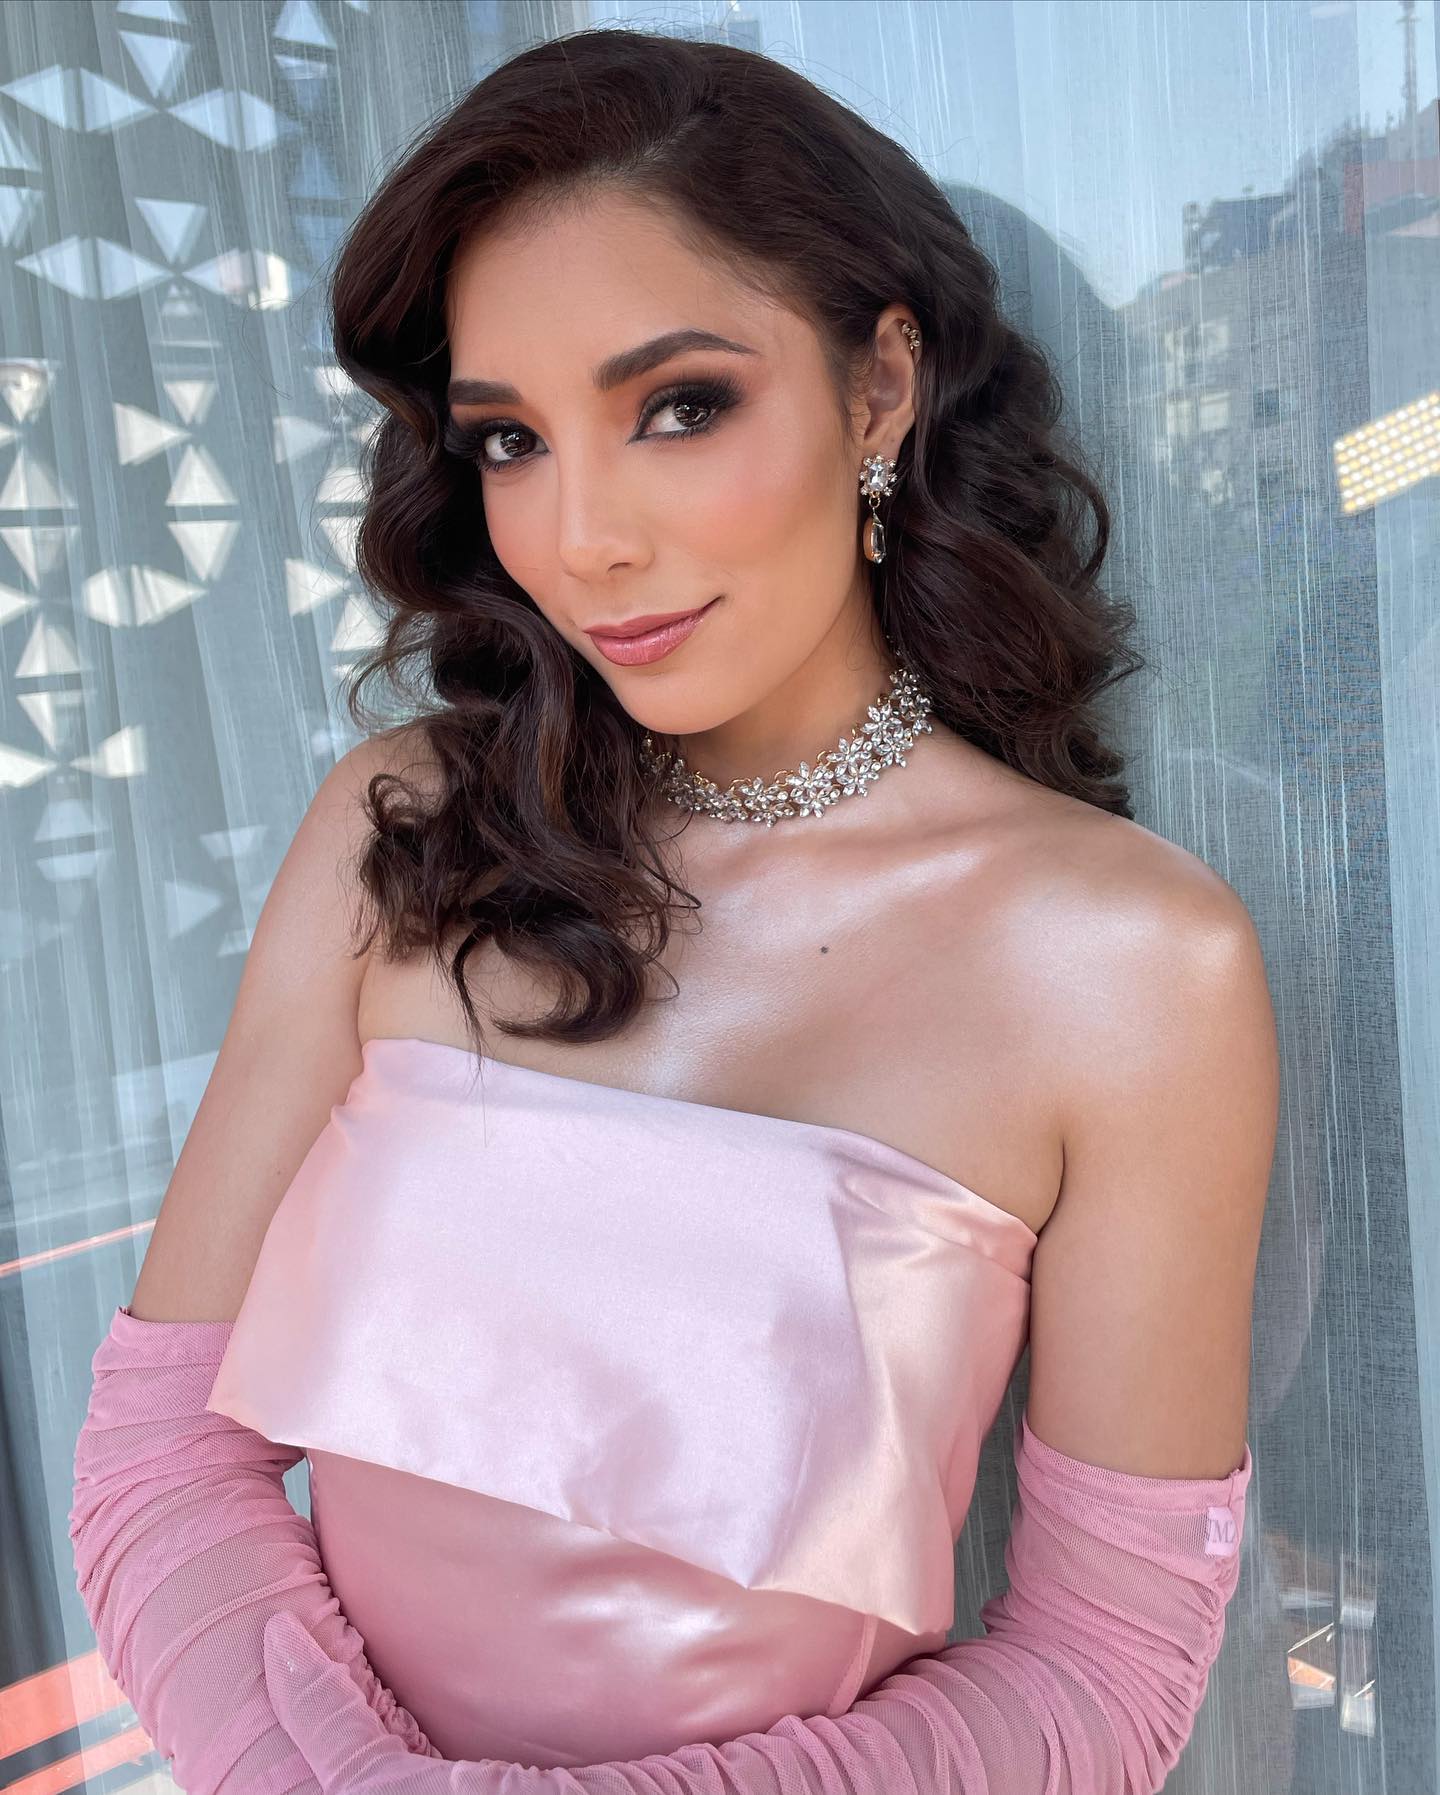 MissWorld - alejandra diaz de leon soler, miss mexico mundo 2023/miss globe international 2019. Lpic6383